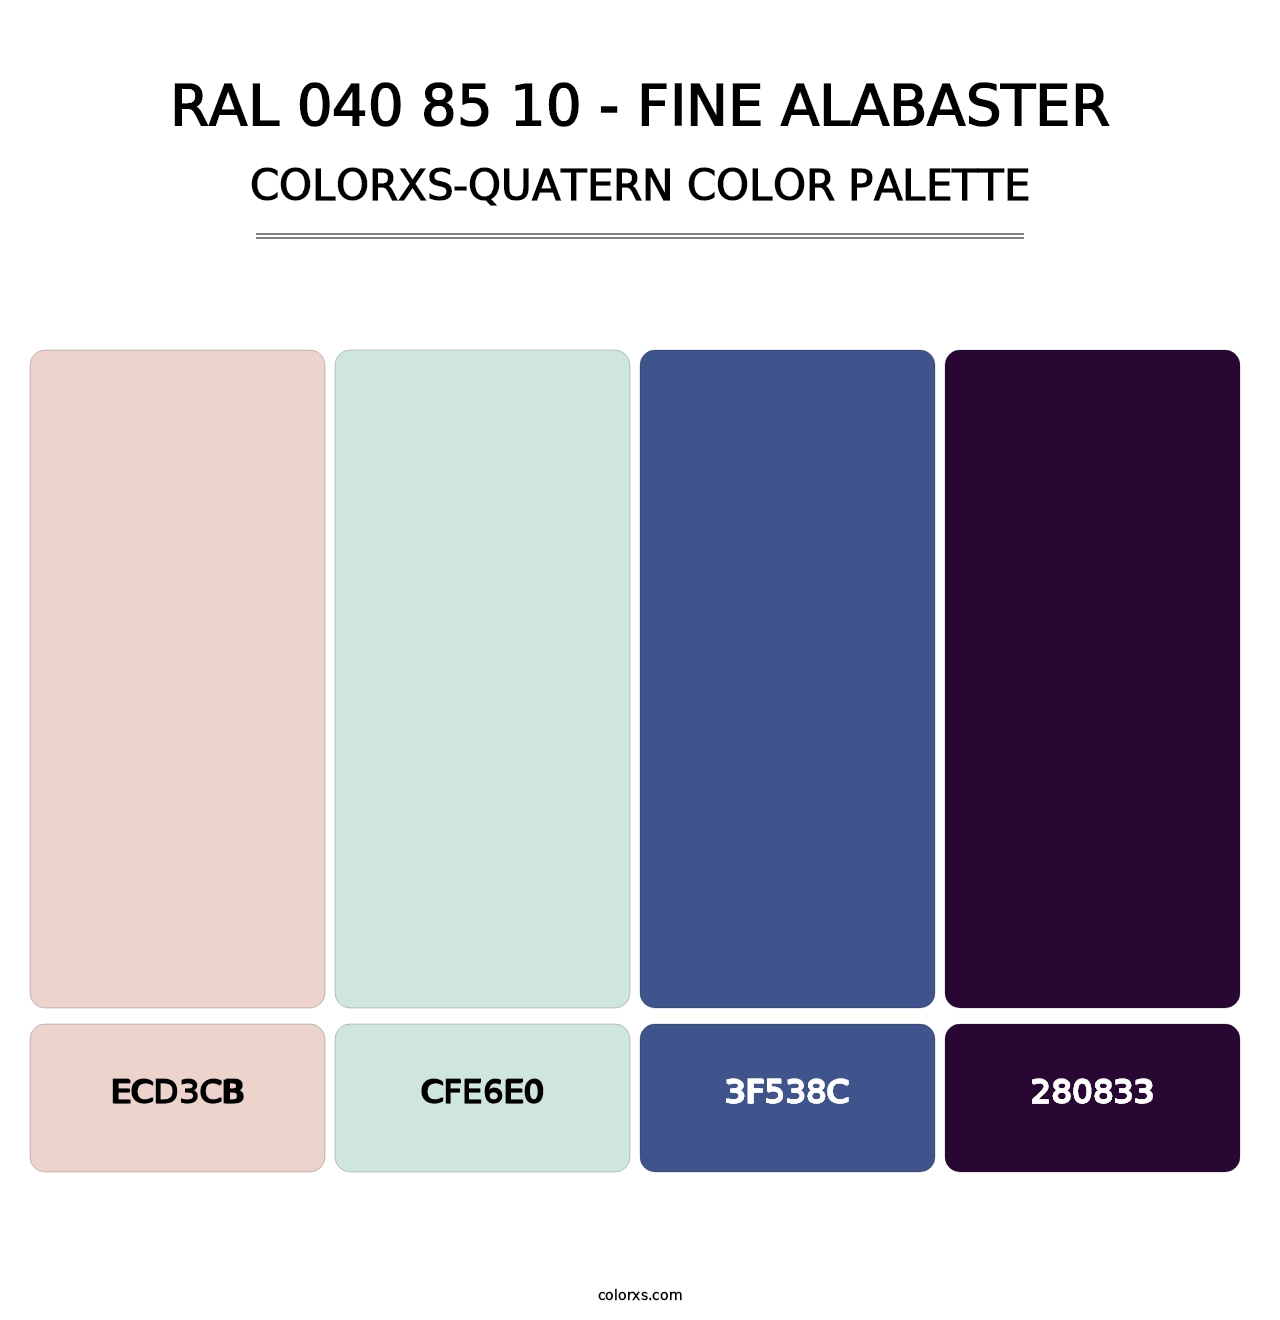 RAL 040 85 10 - Fine Alabaster - Colorxs Quatern Palette